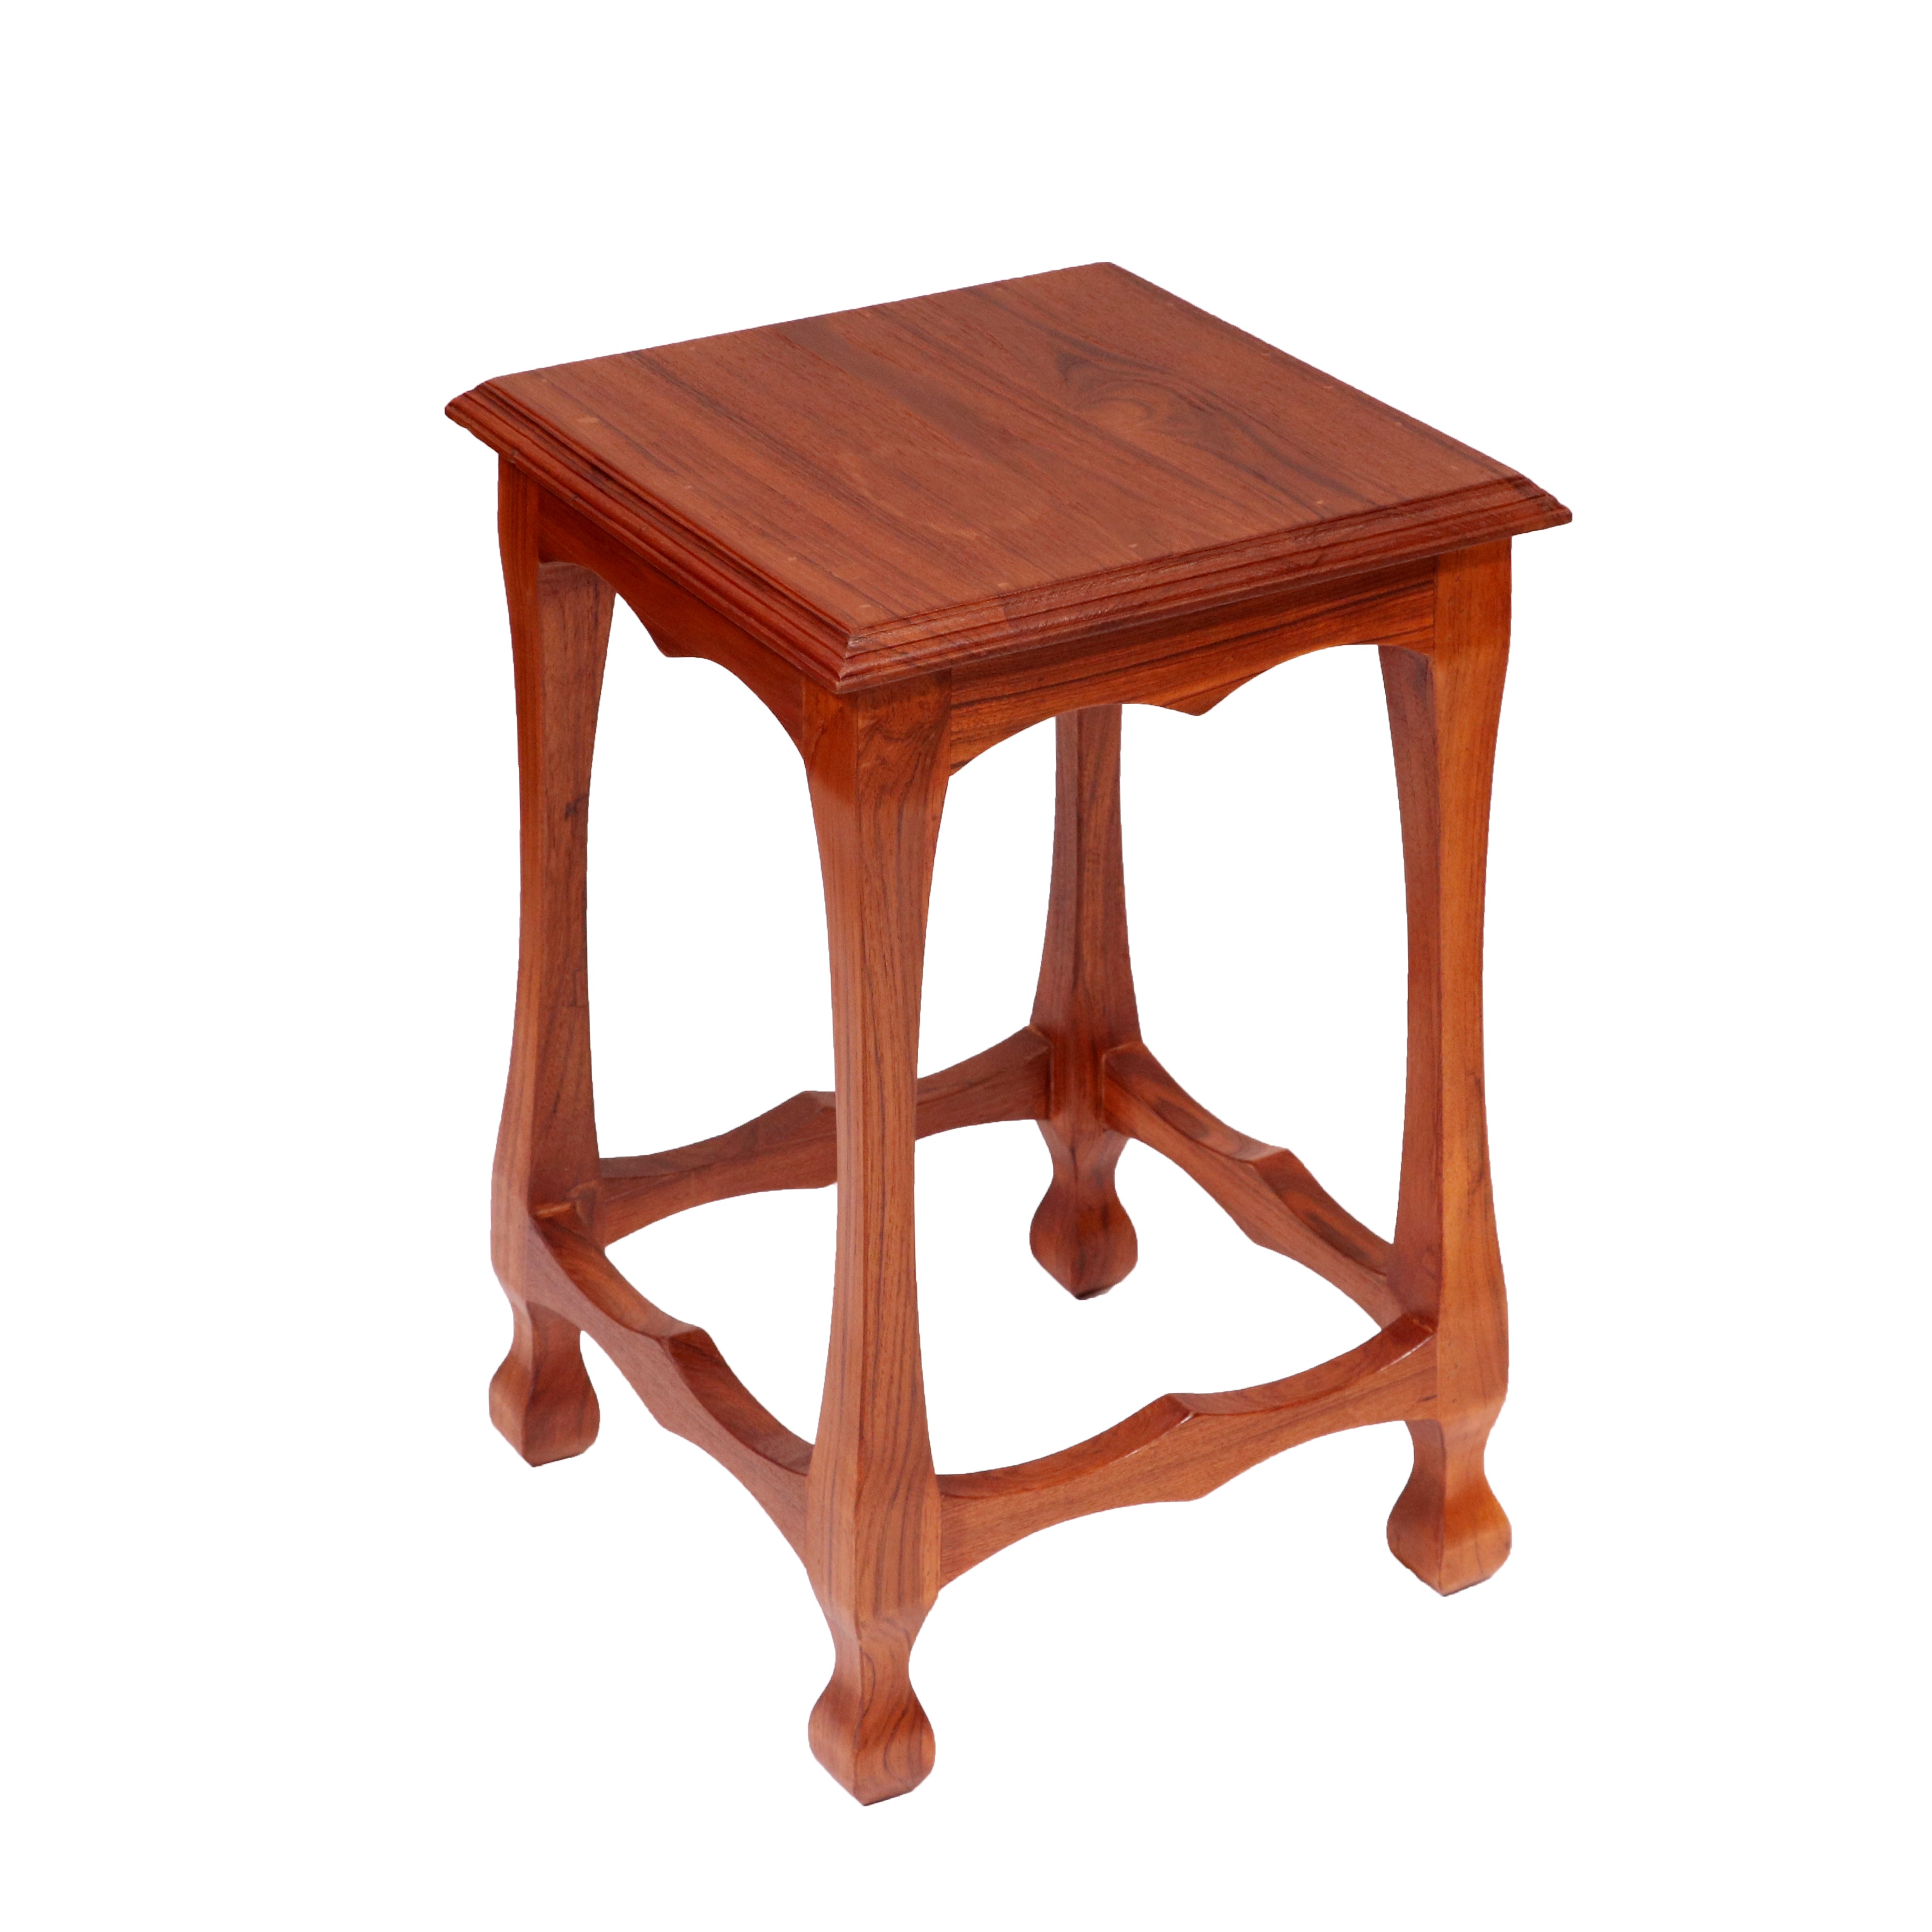 Classic wave pattern durable Teak wood stool Stool